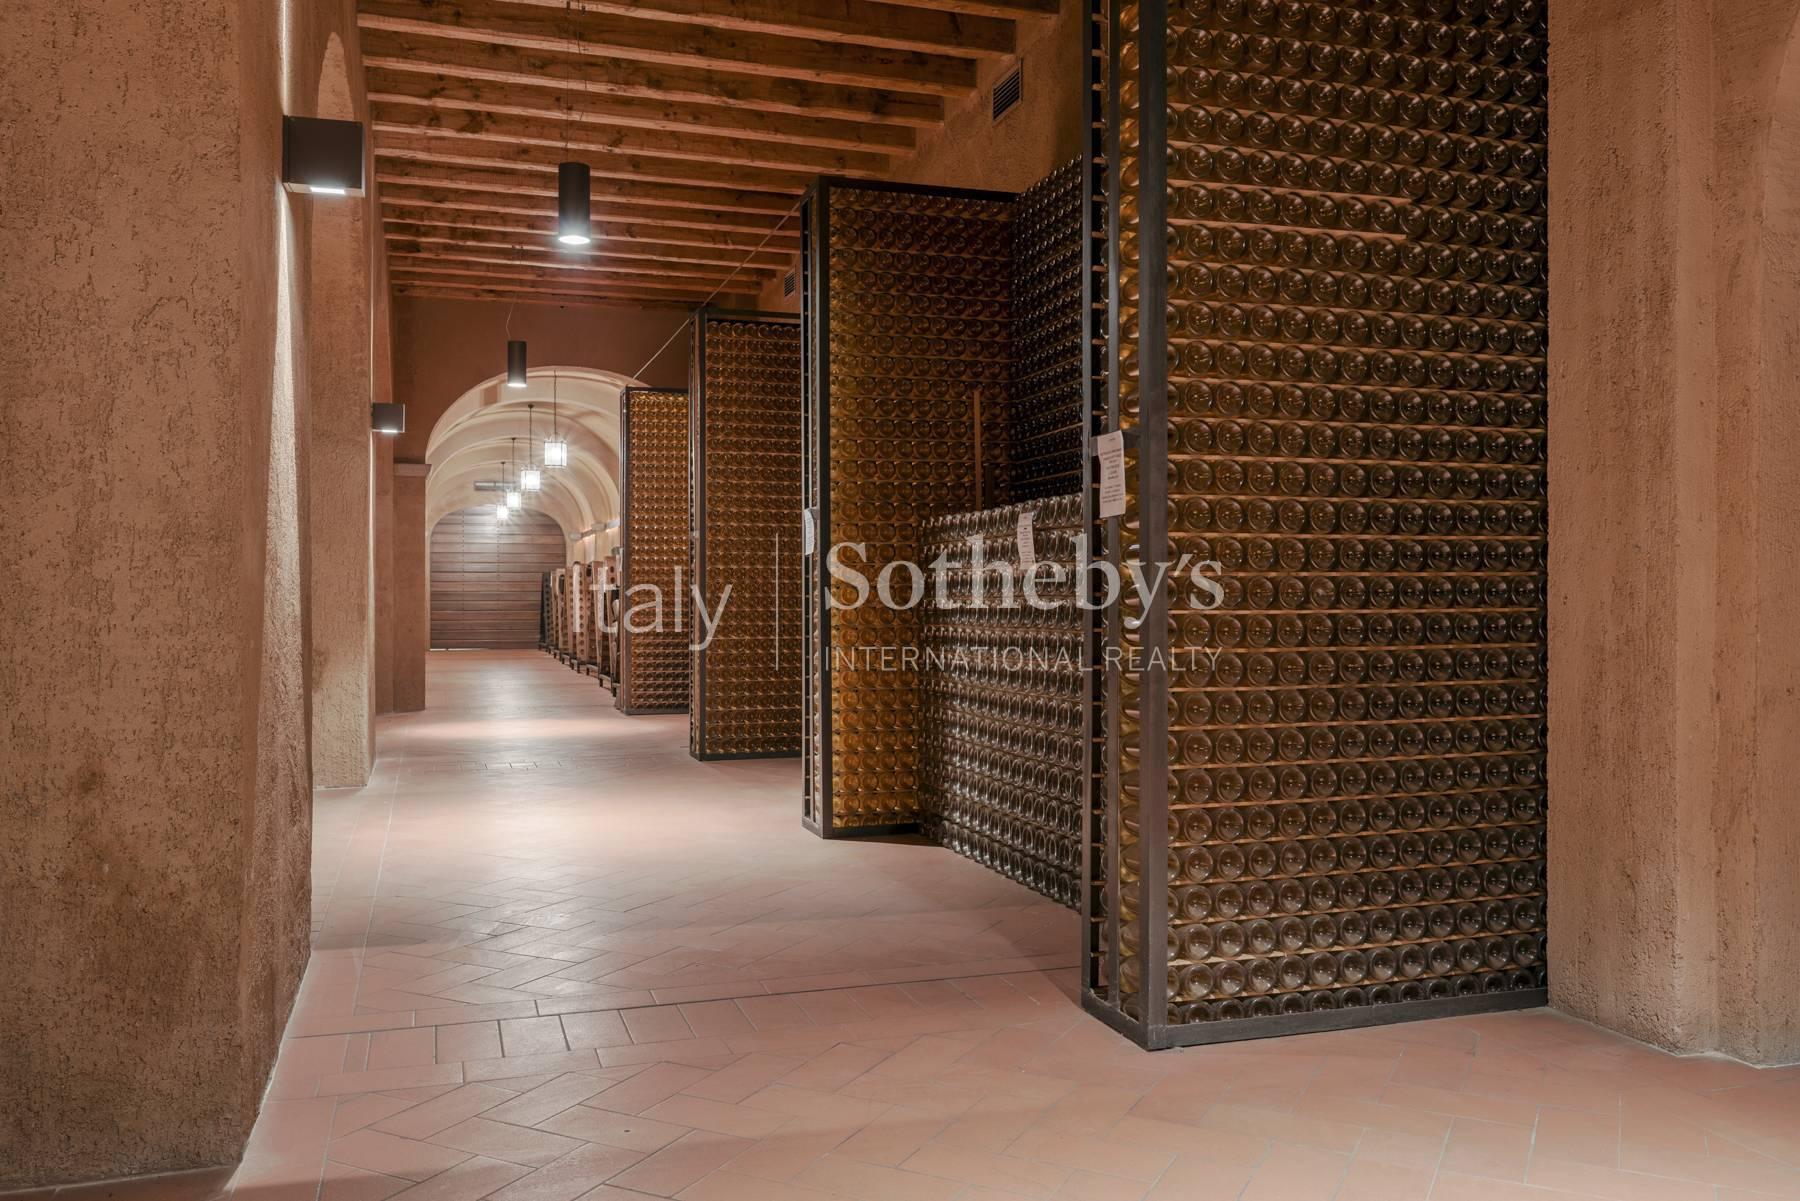 Splendid wine estate in the heart of Franciacorta - 25